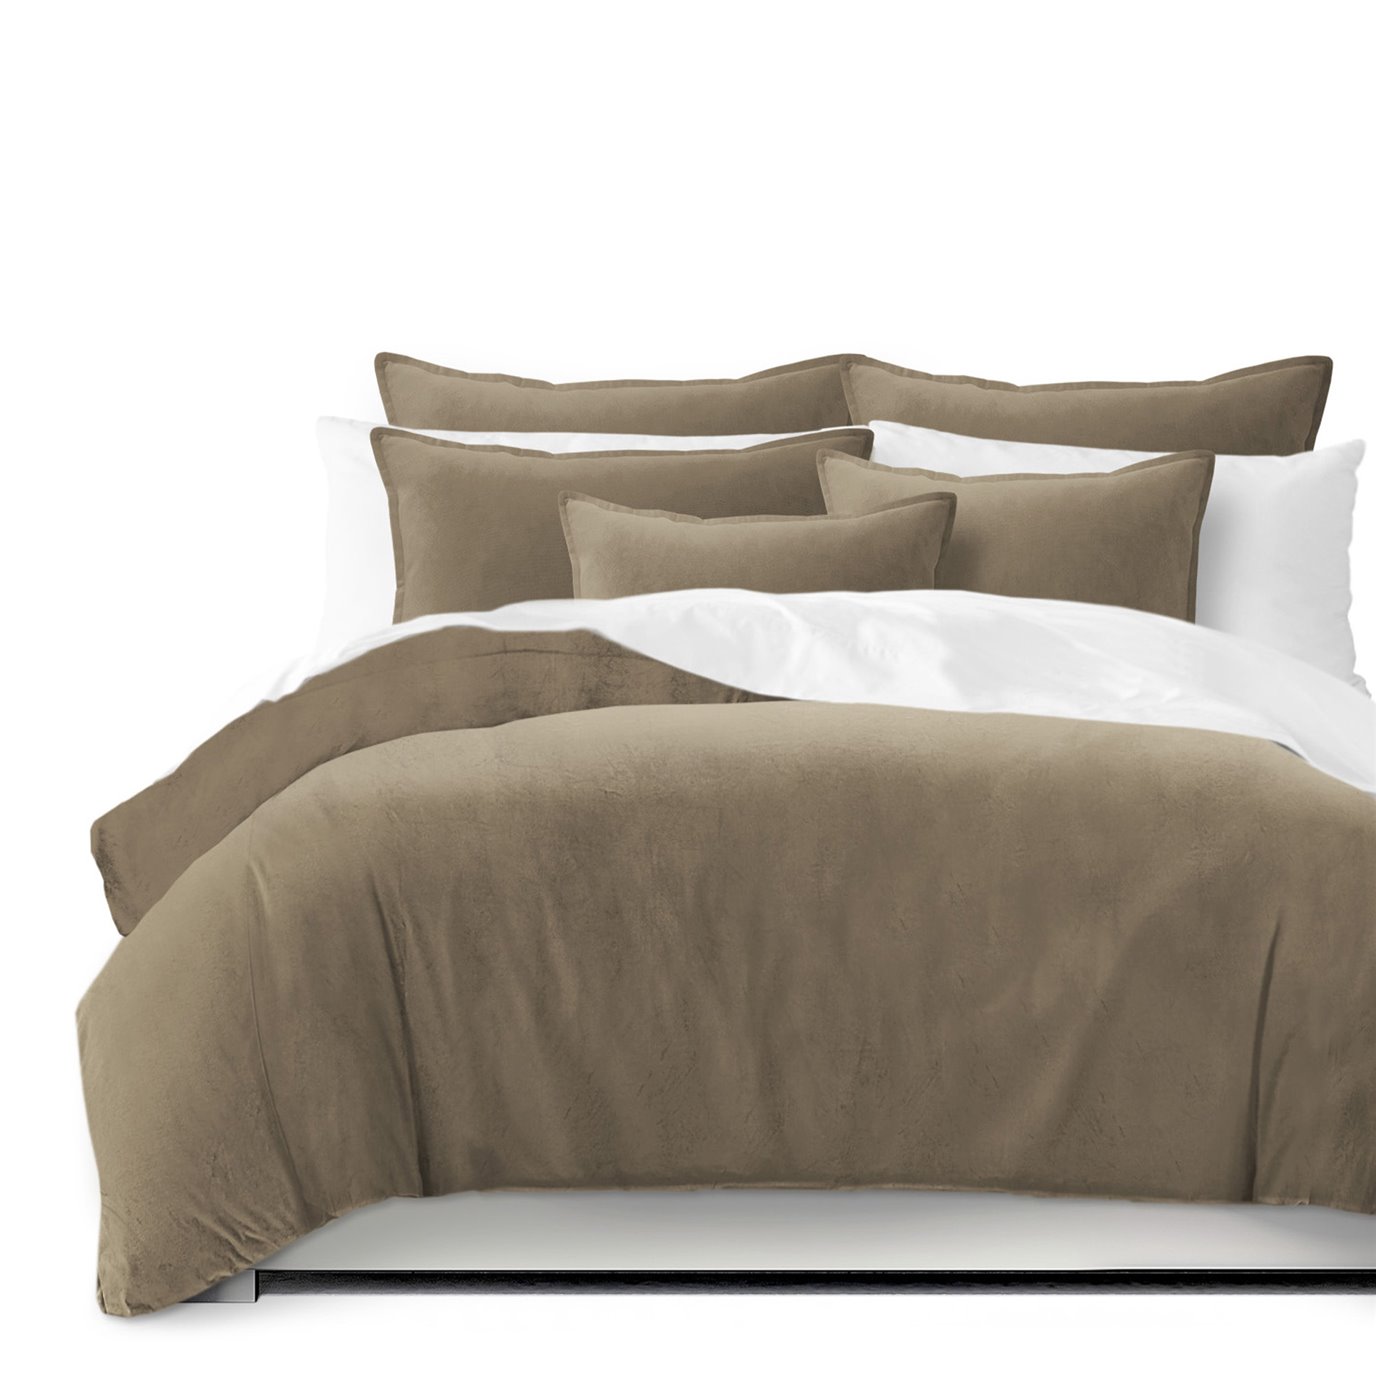 Vanessa Sable Comforter and Pillow Sham(s) Set - Size Super Queen